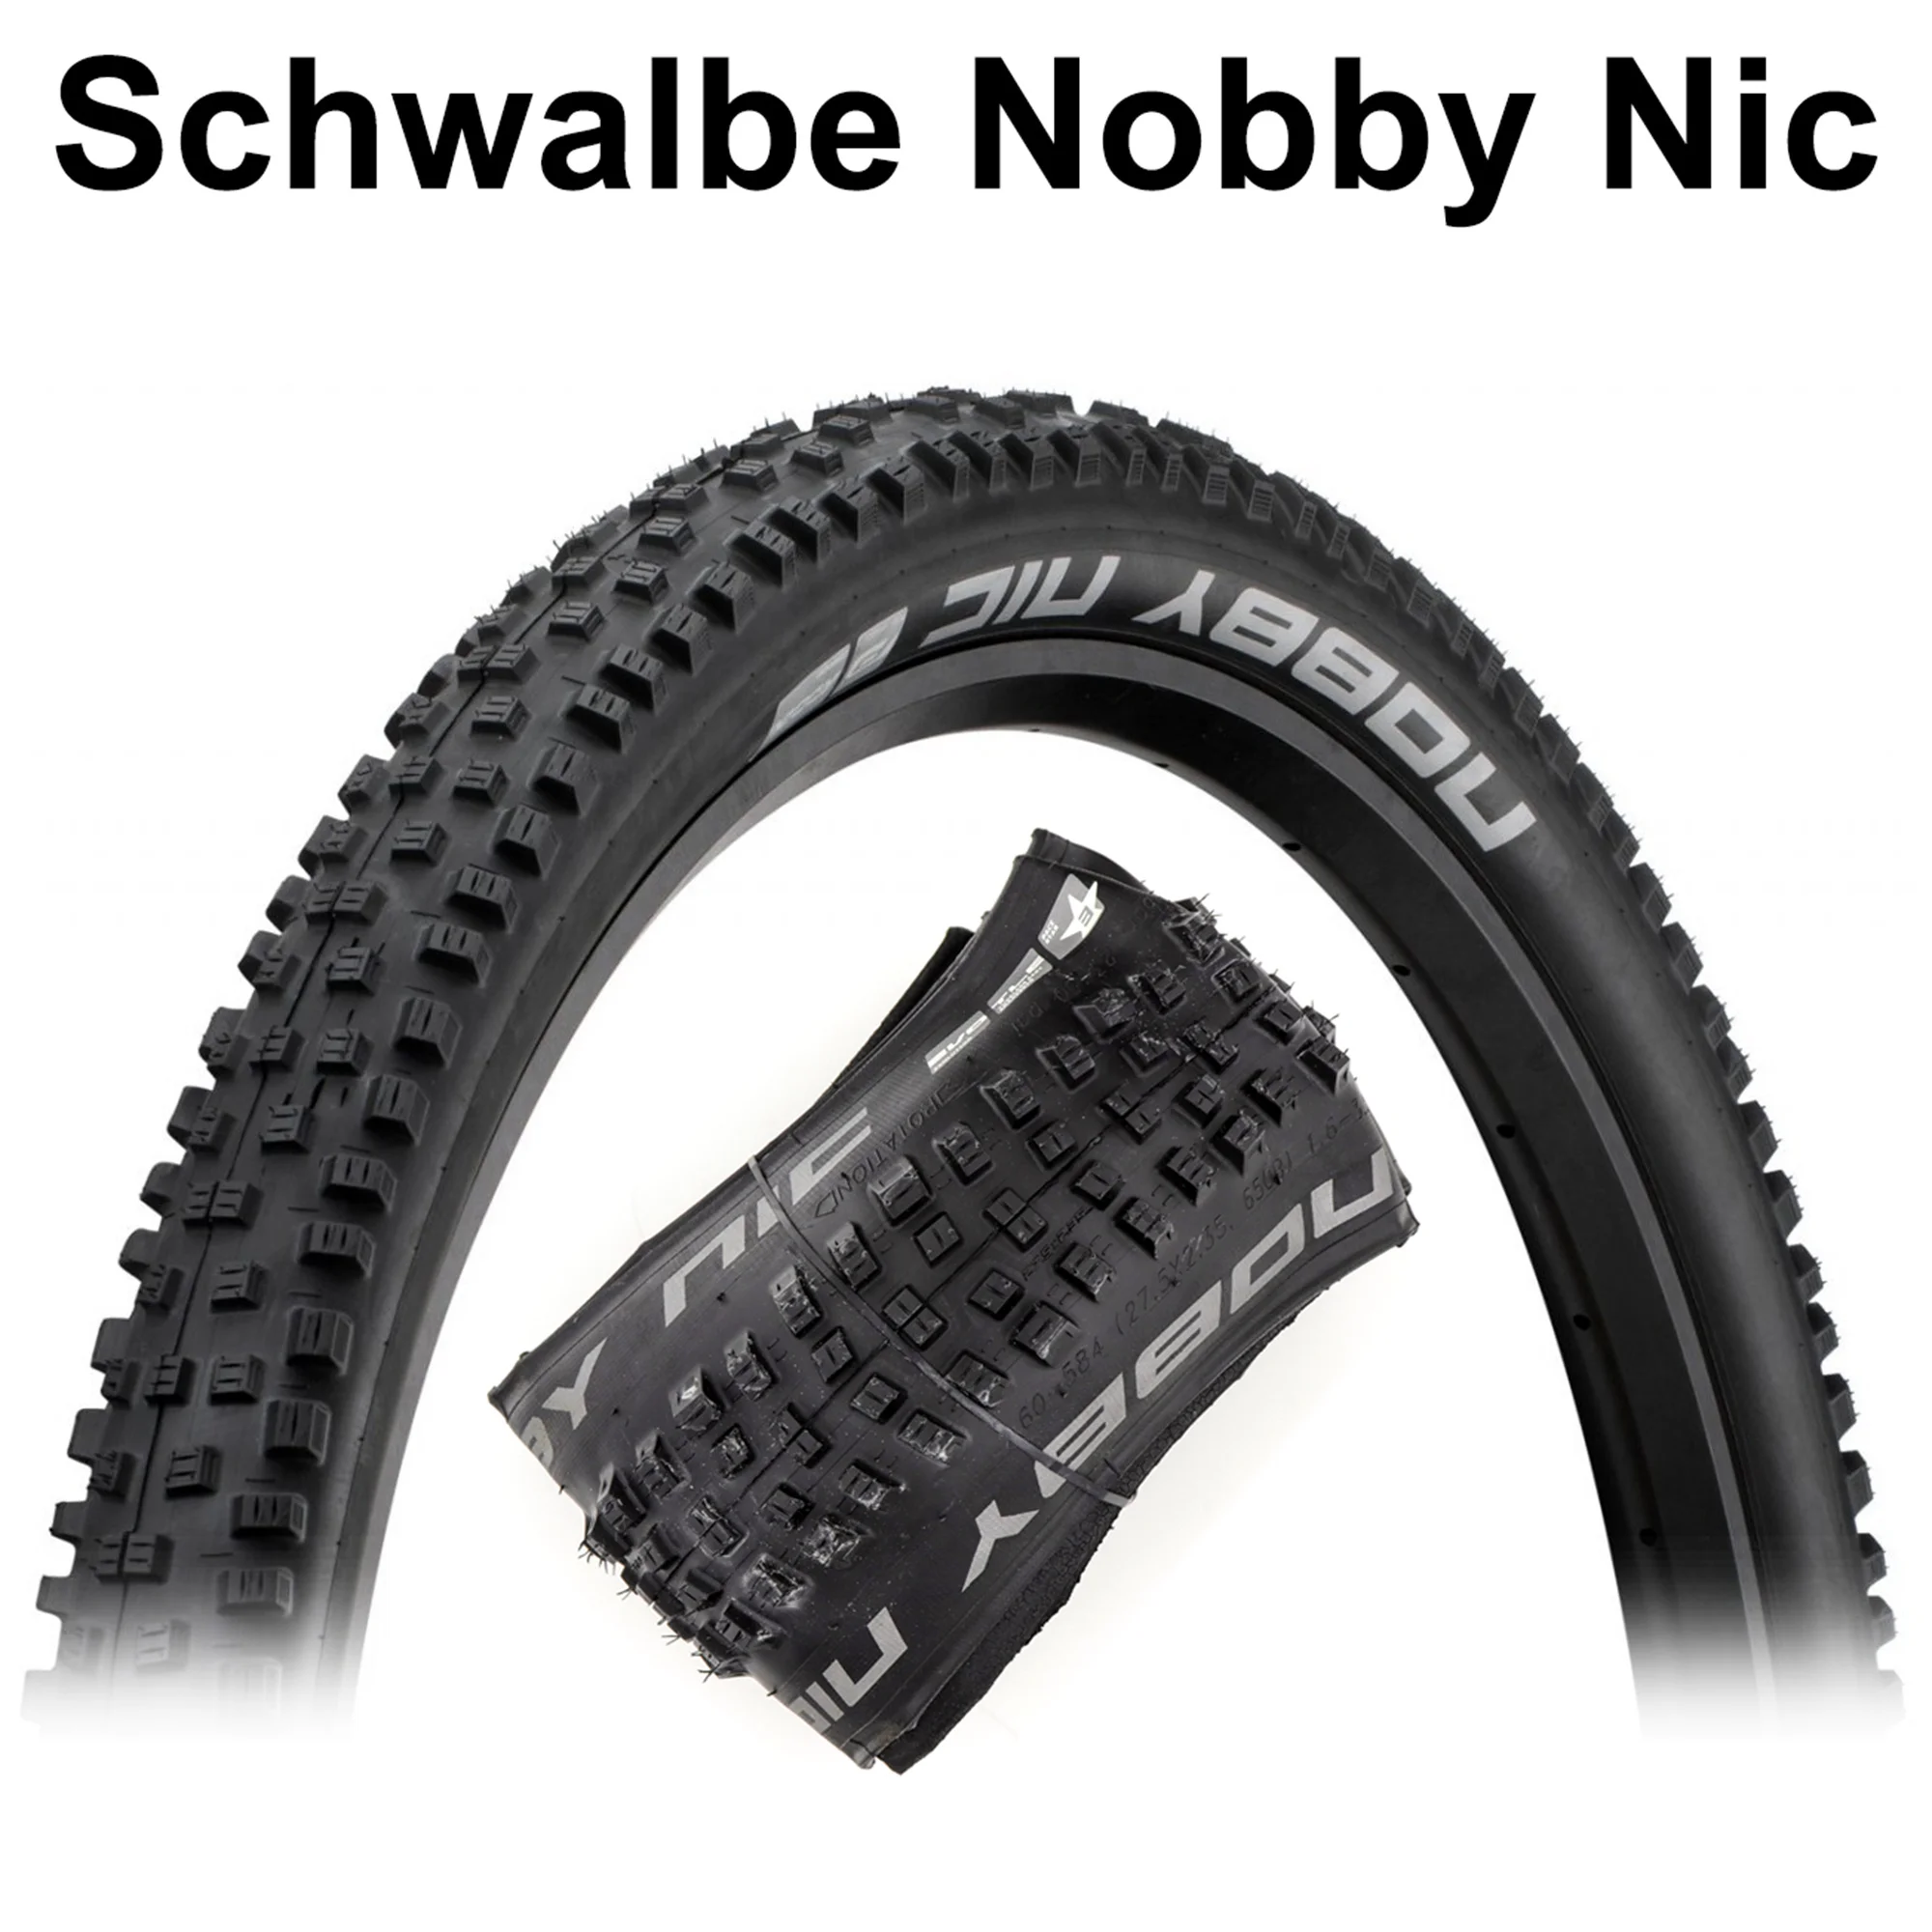 Folding Performance, Tubeless Black 27.5 x 2.35 Schwalbe Nobby Nic Tire 